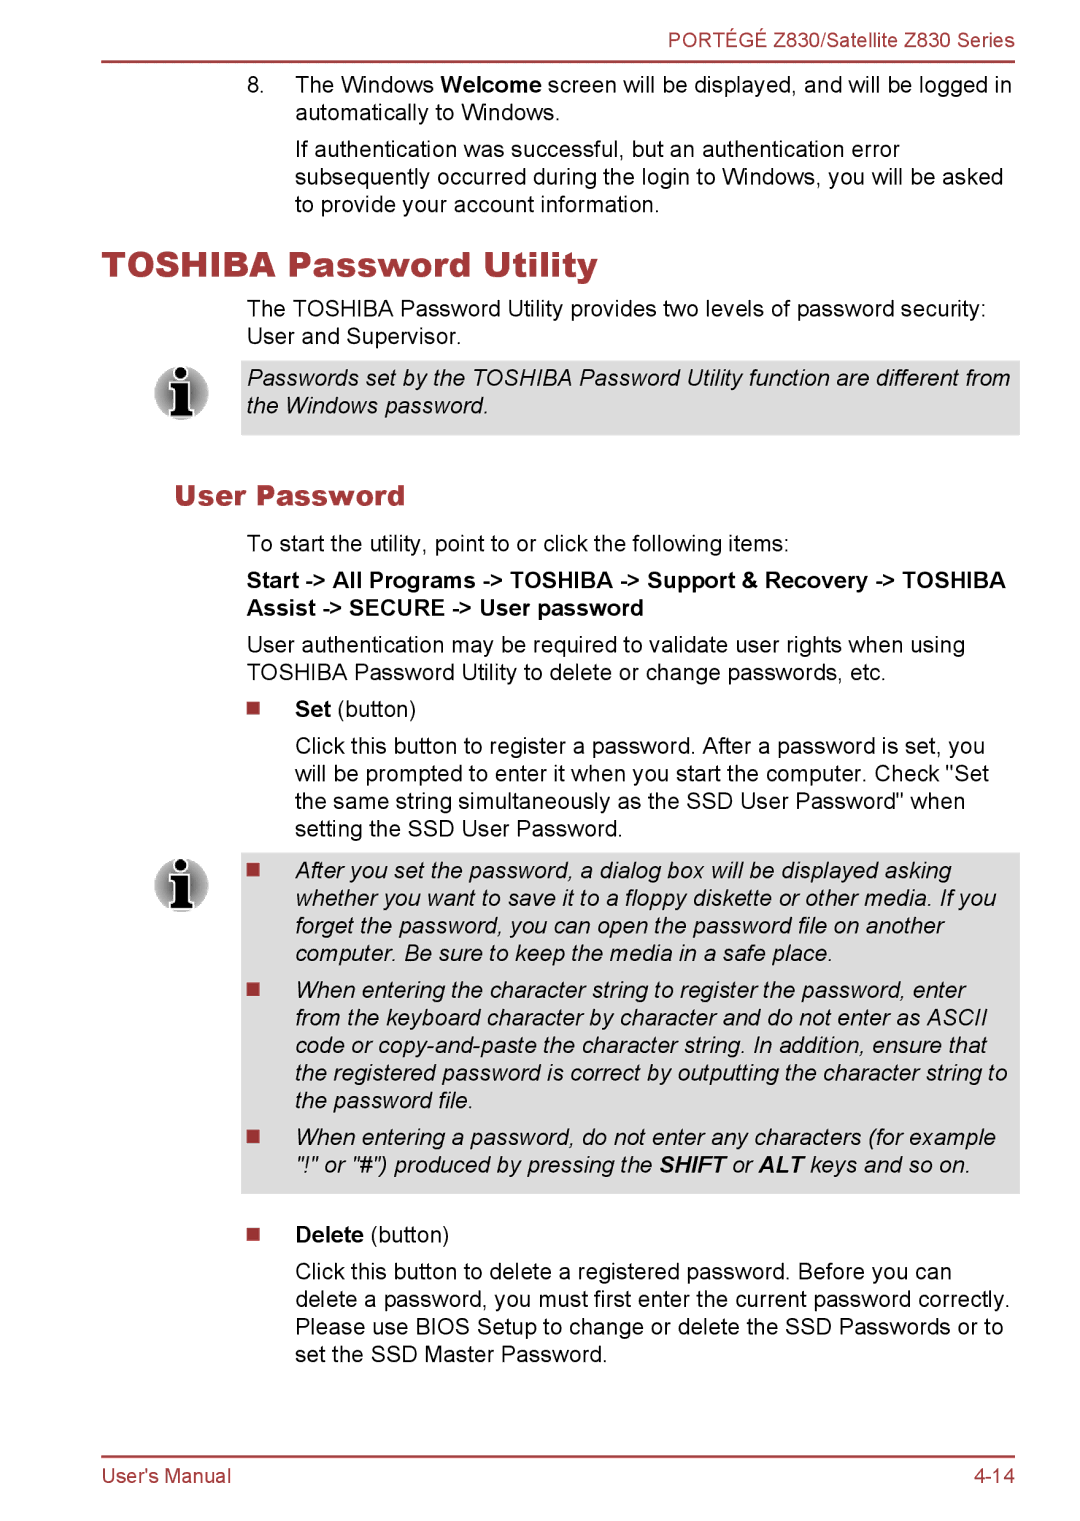 Toshiba Z830 user manual Toshiba Password Utility, User Password 